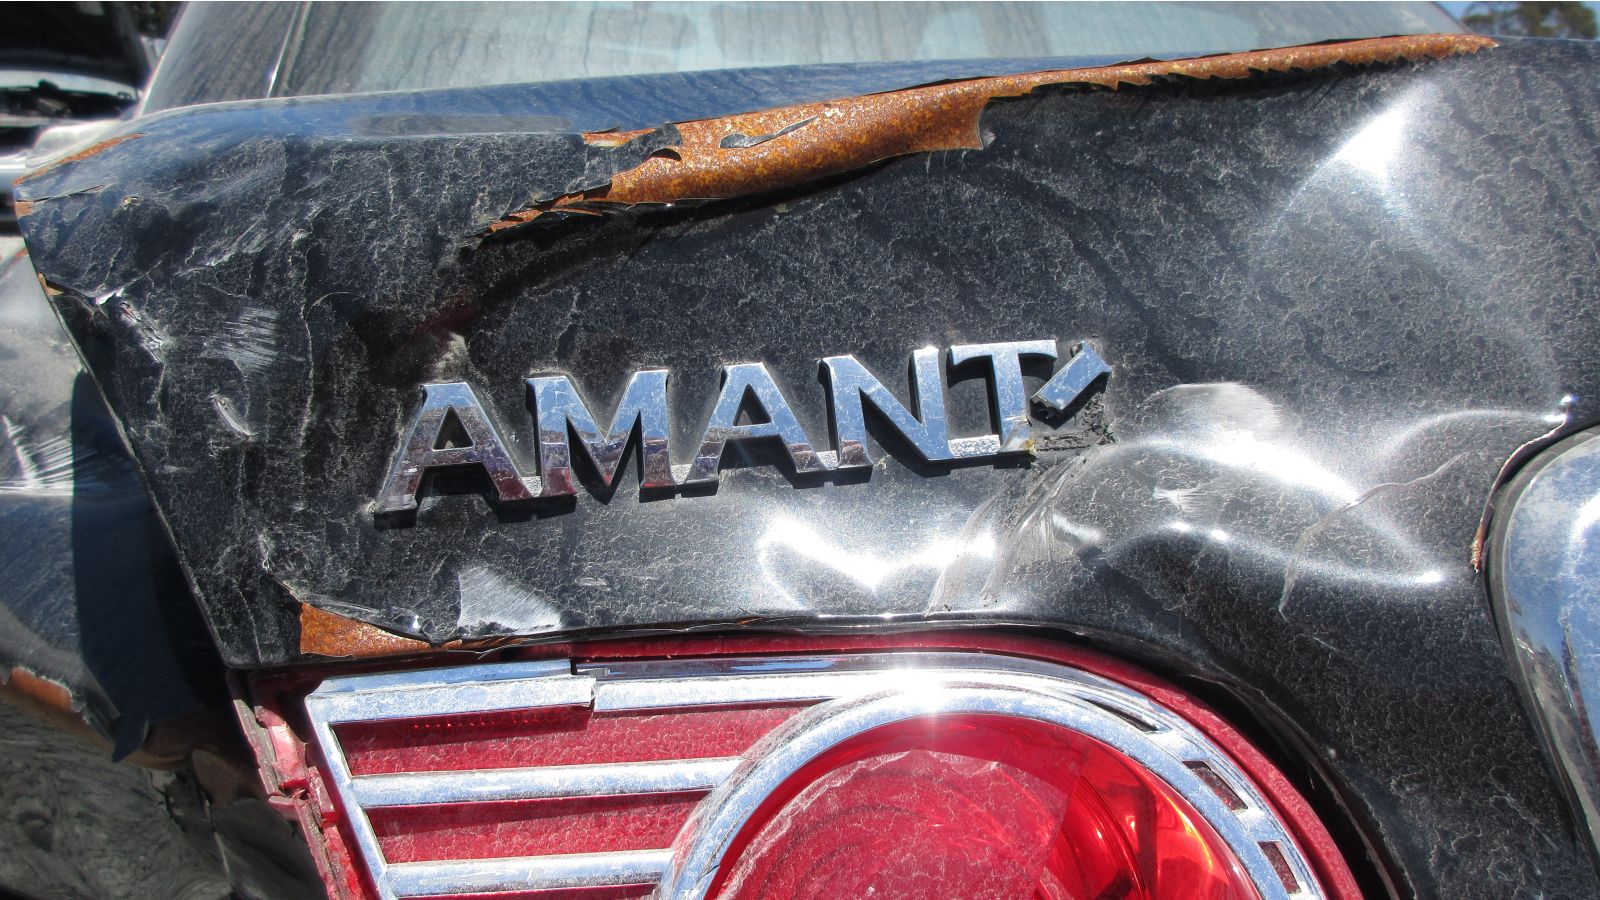 2006 Kia Amanti, once a Mercedes clone, is now a Junkyard Gem - Autoblog